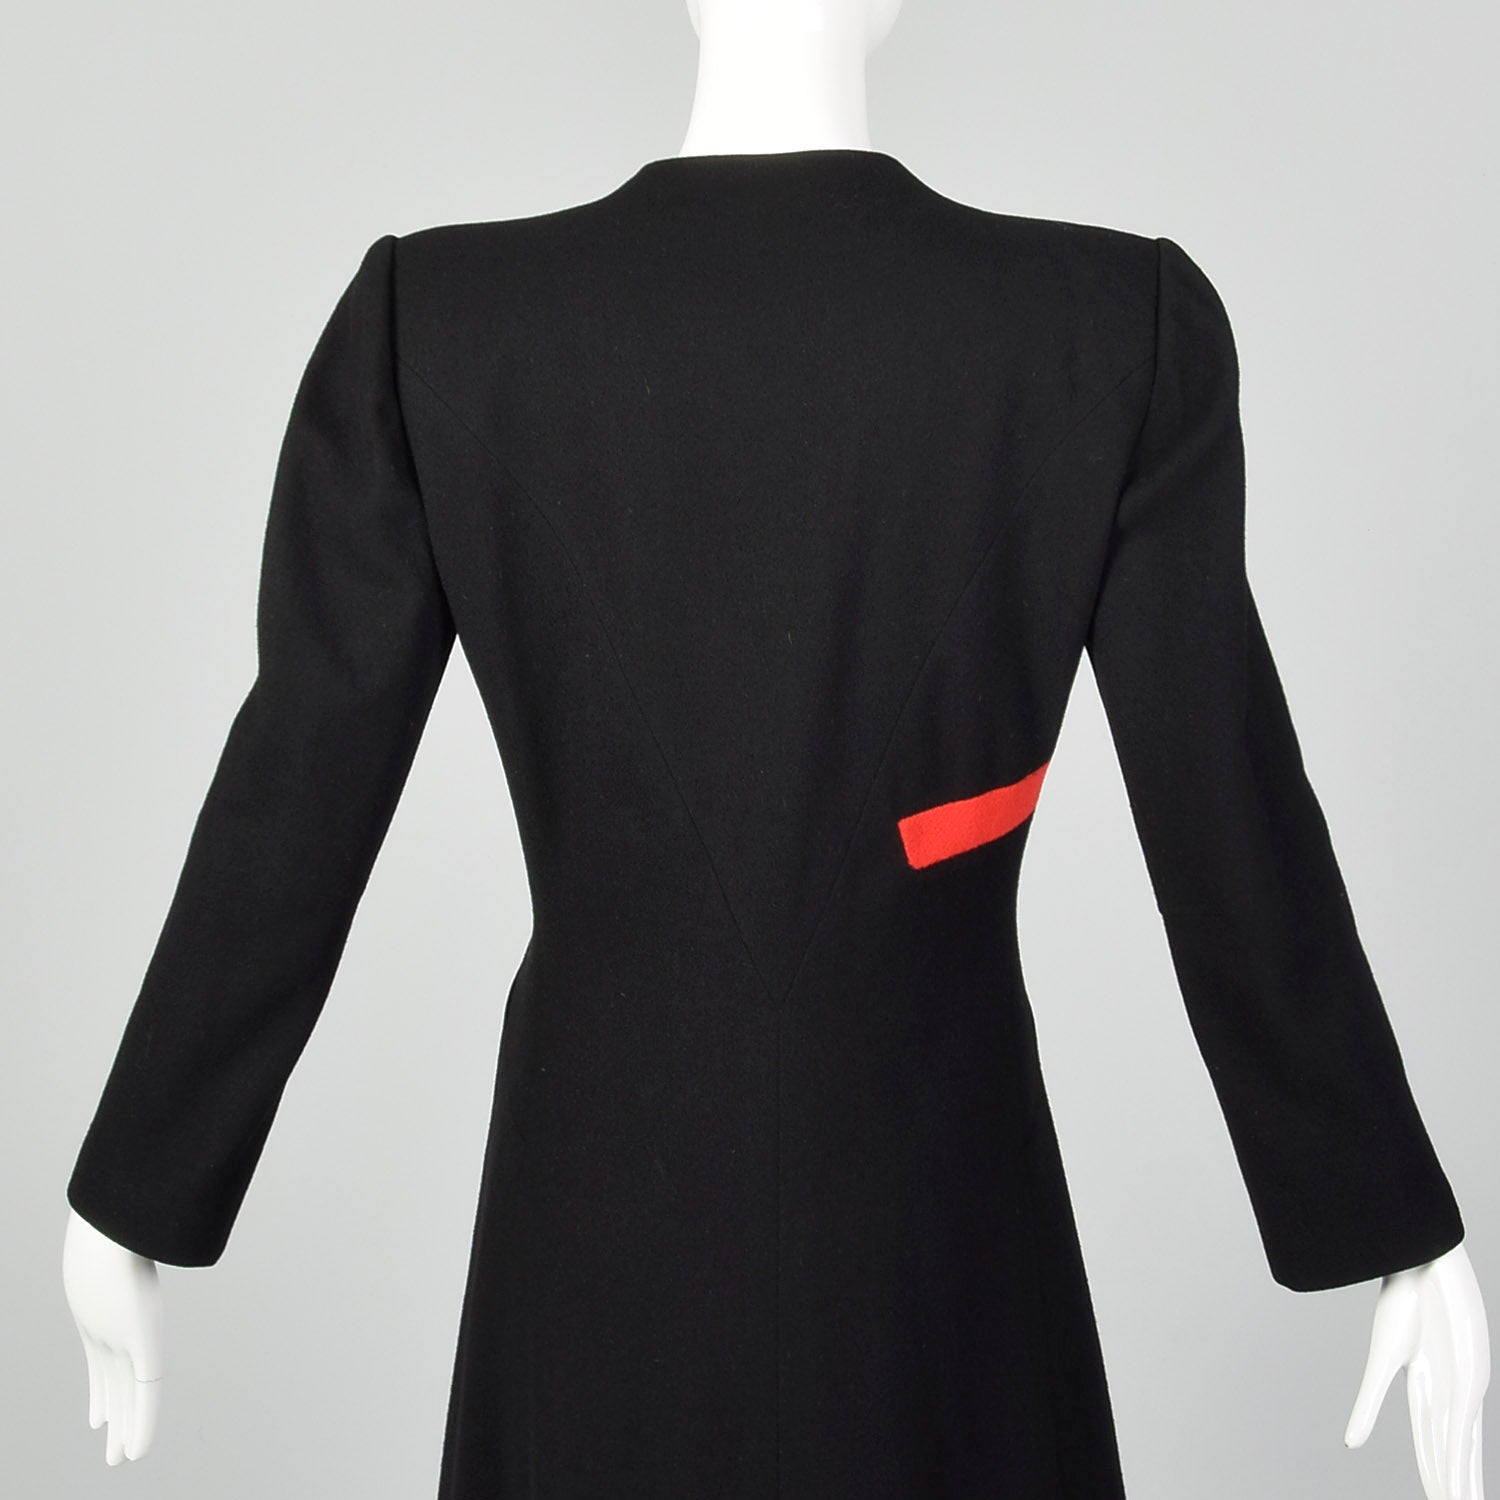 1940s Gilbert Adrian Black Wool Coat with Asymmetric Red Stripe